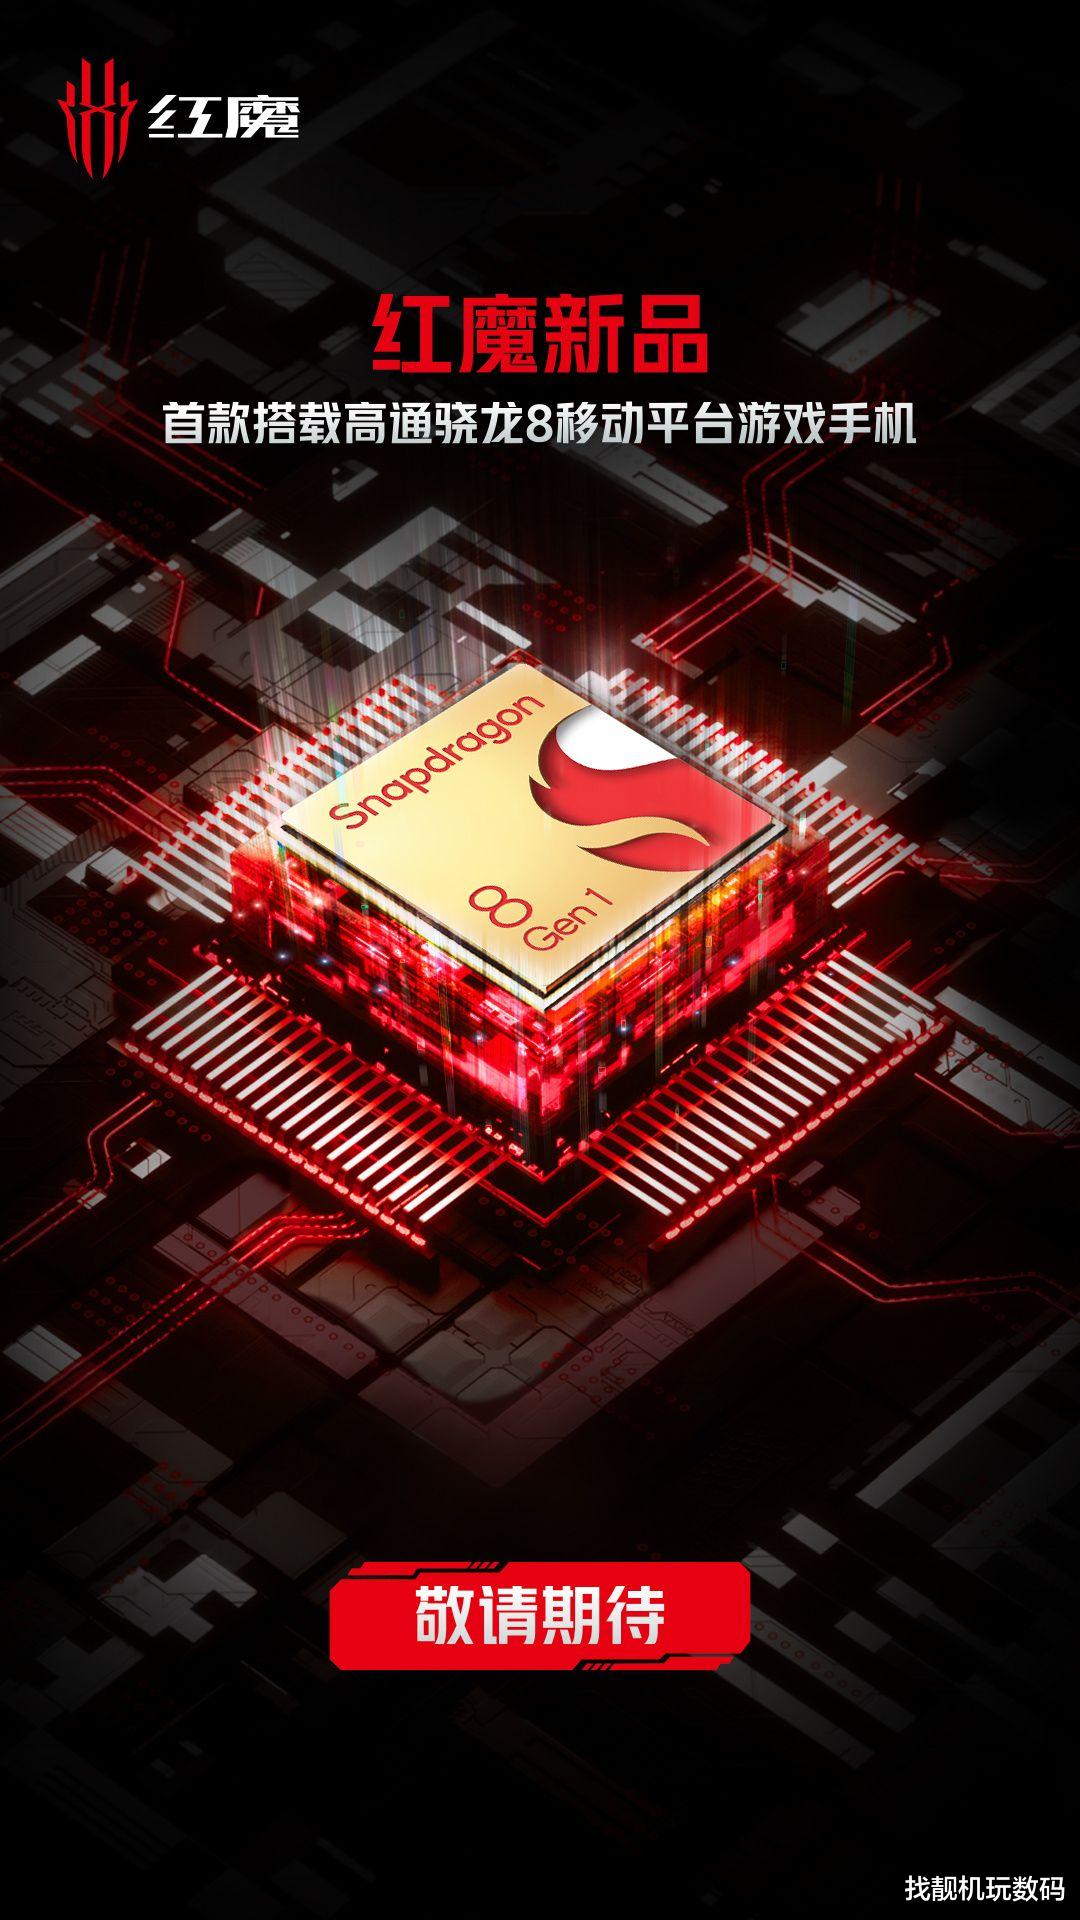 CPU|iPhone用户别哭，红魔新品曝光：165W+骁龙8